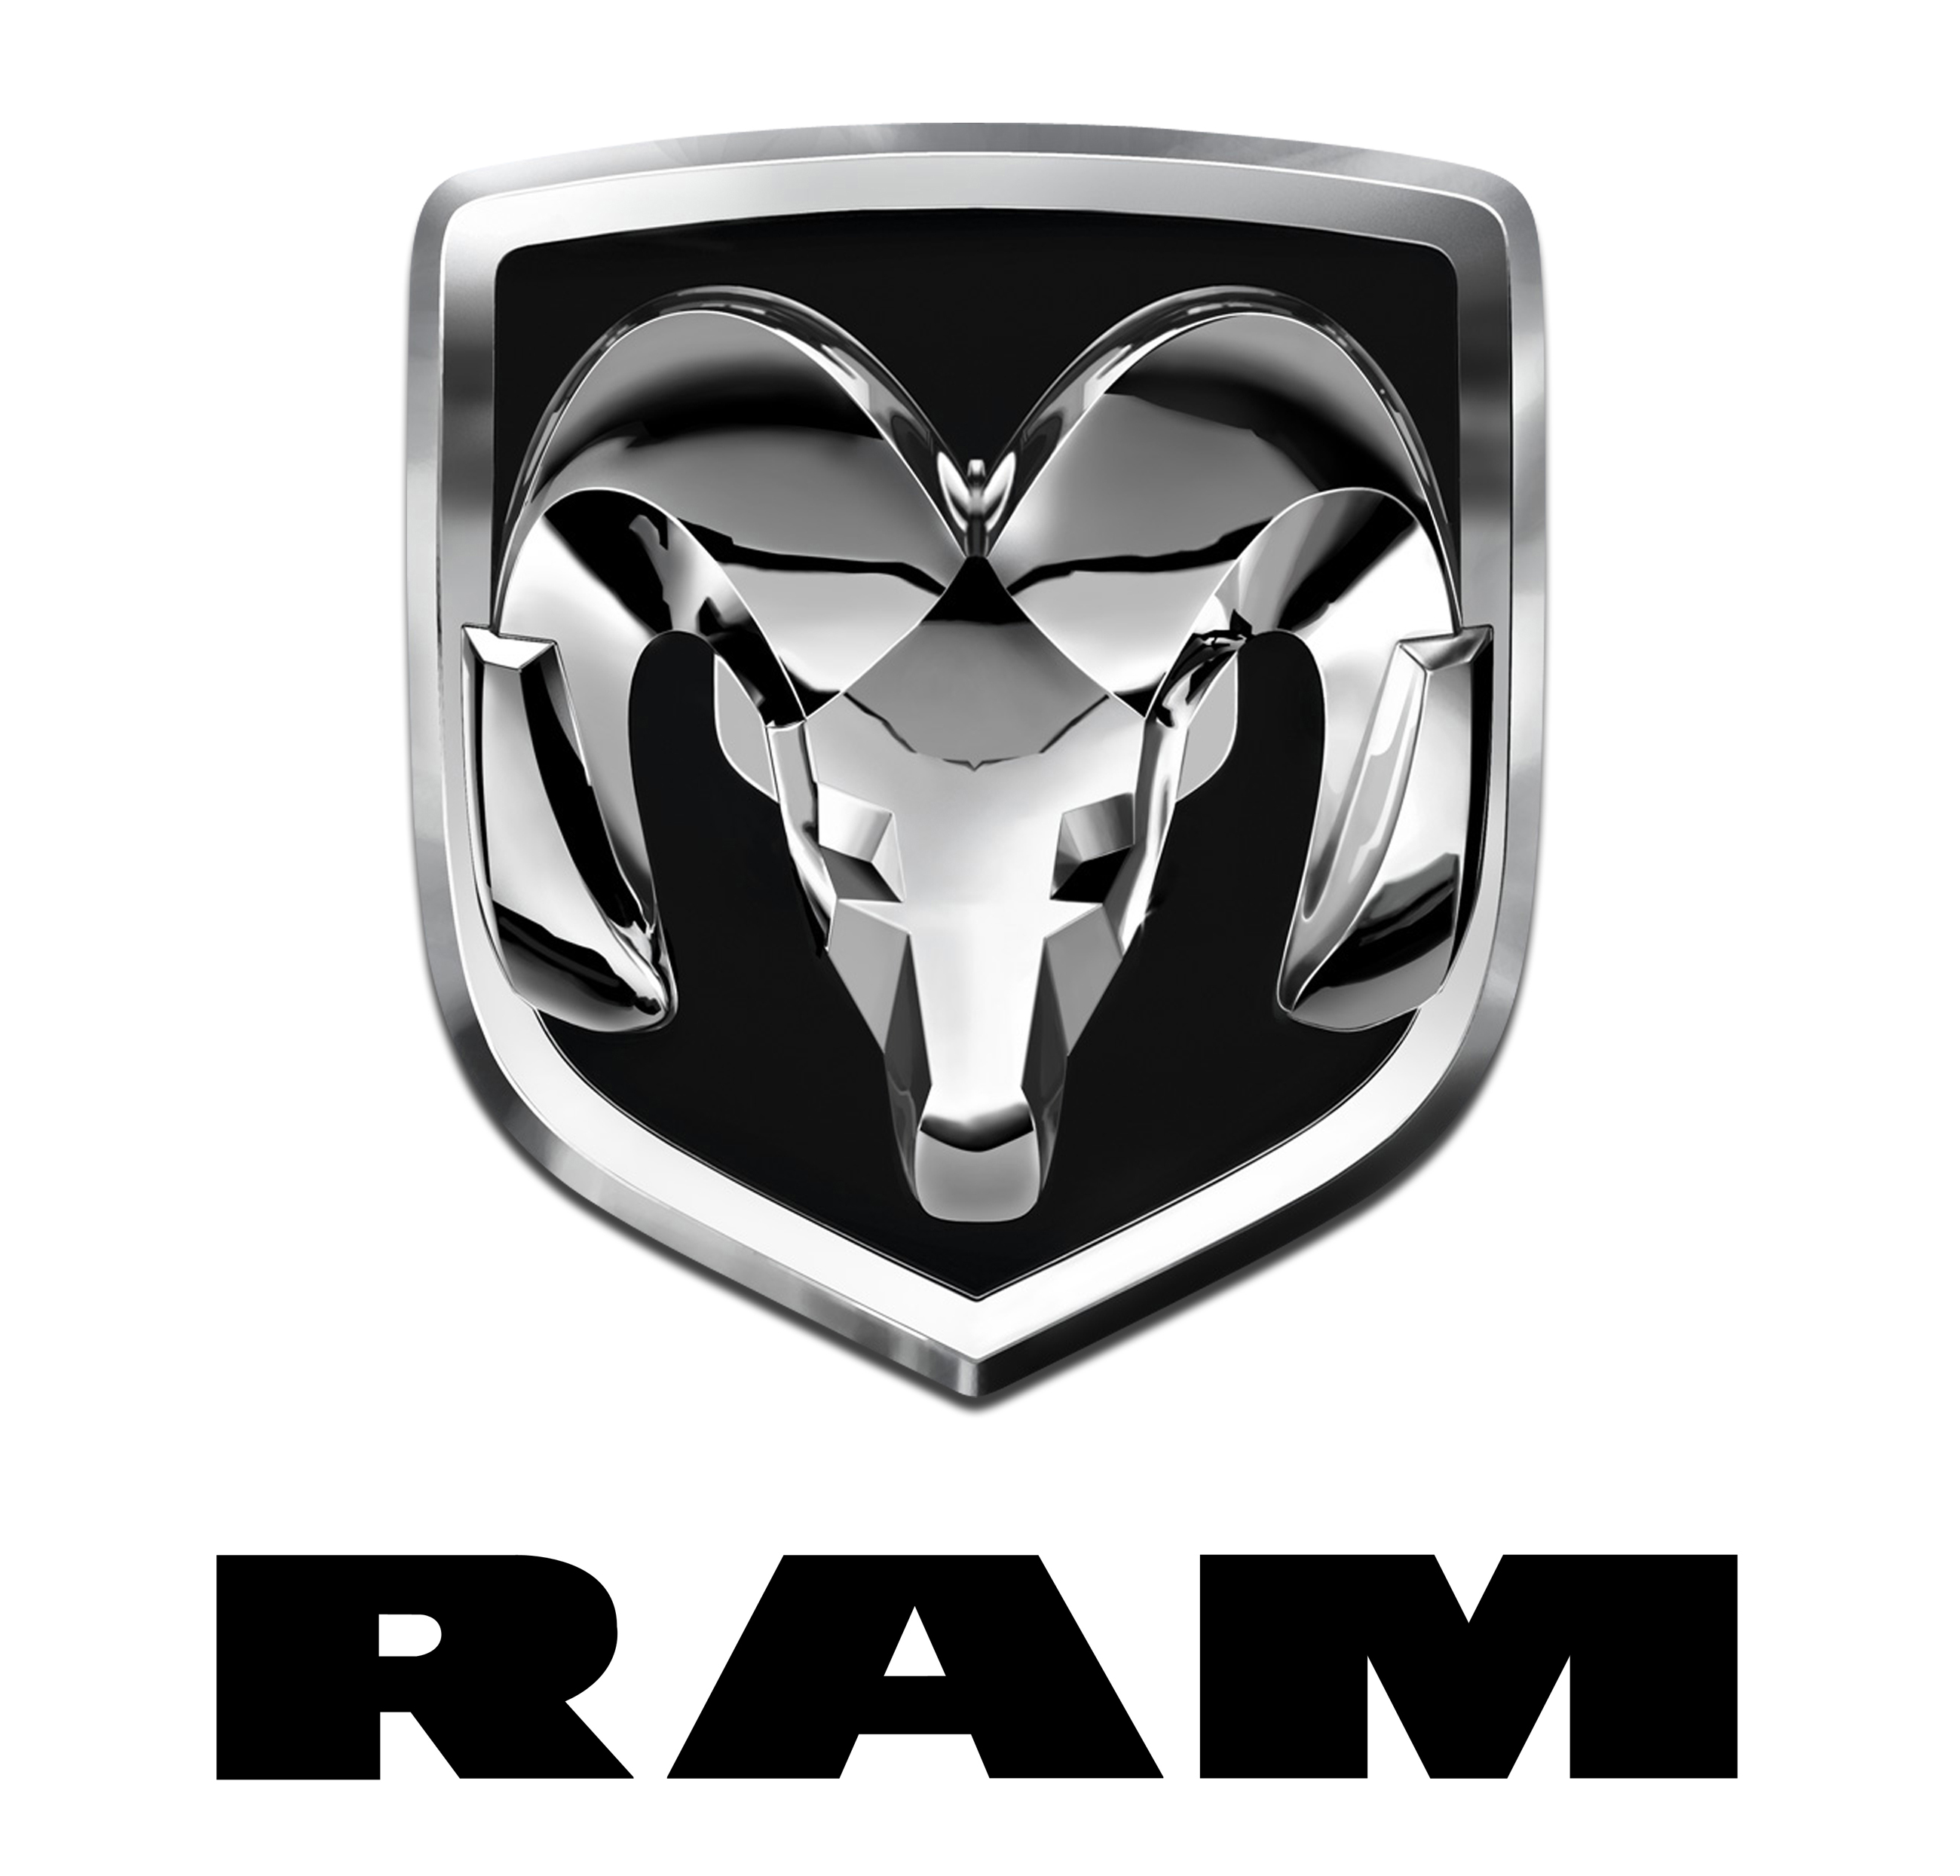 Cool Dodge Ram Logos